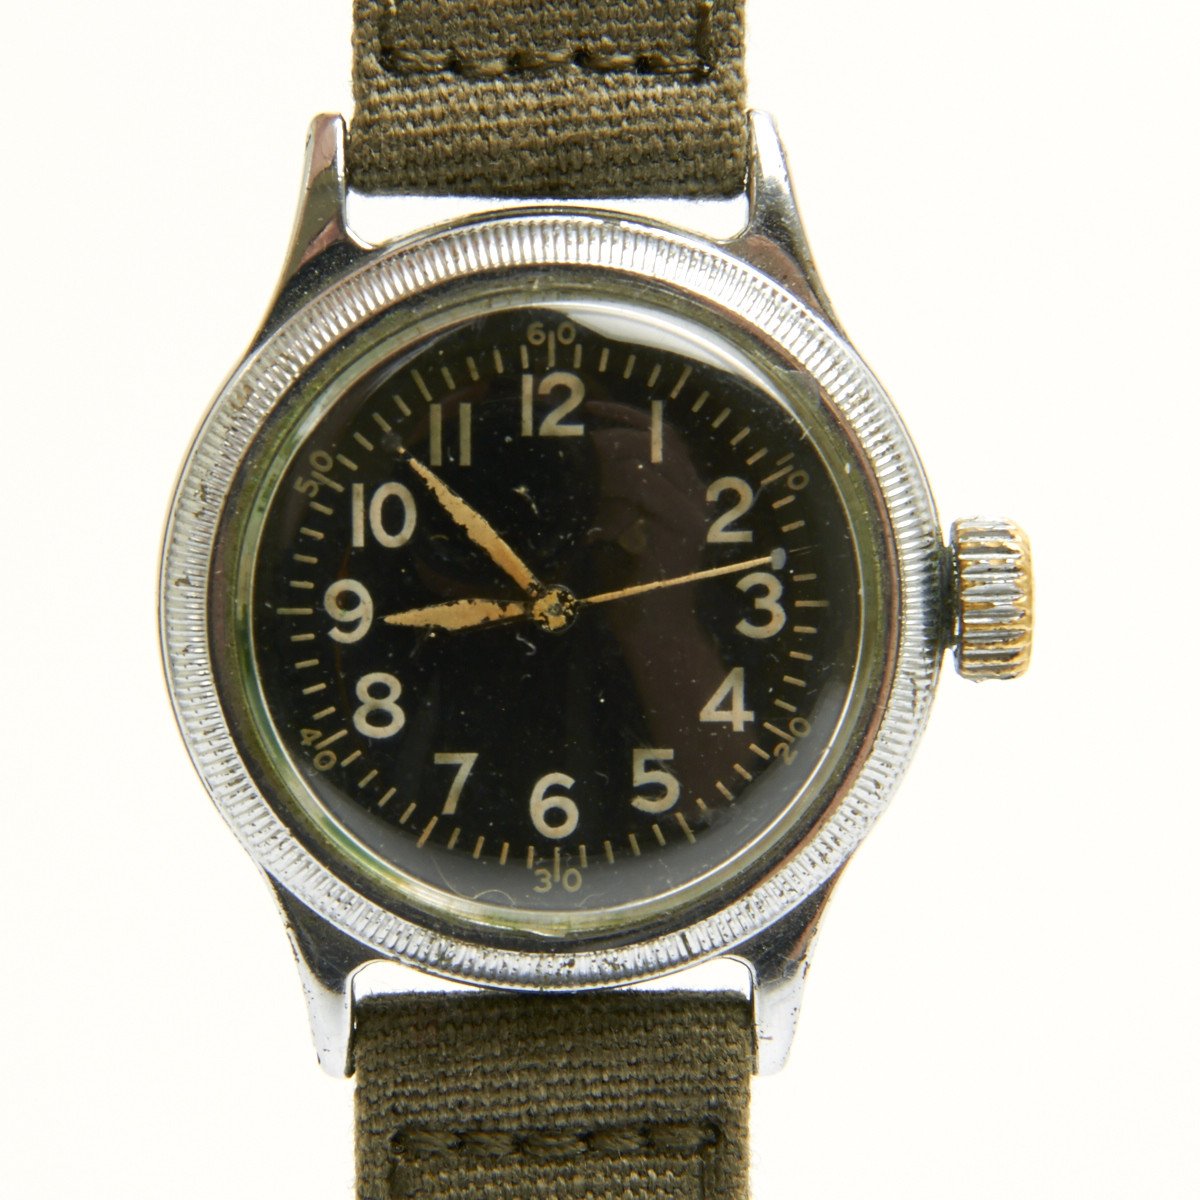 Original U S Wwii Type A 11 Usaaf Wrist Watch By Elgin Fully Functional International